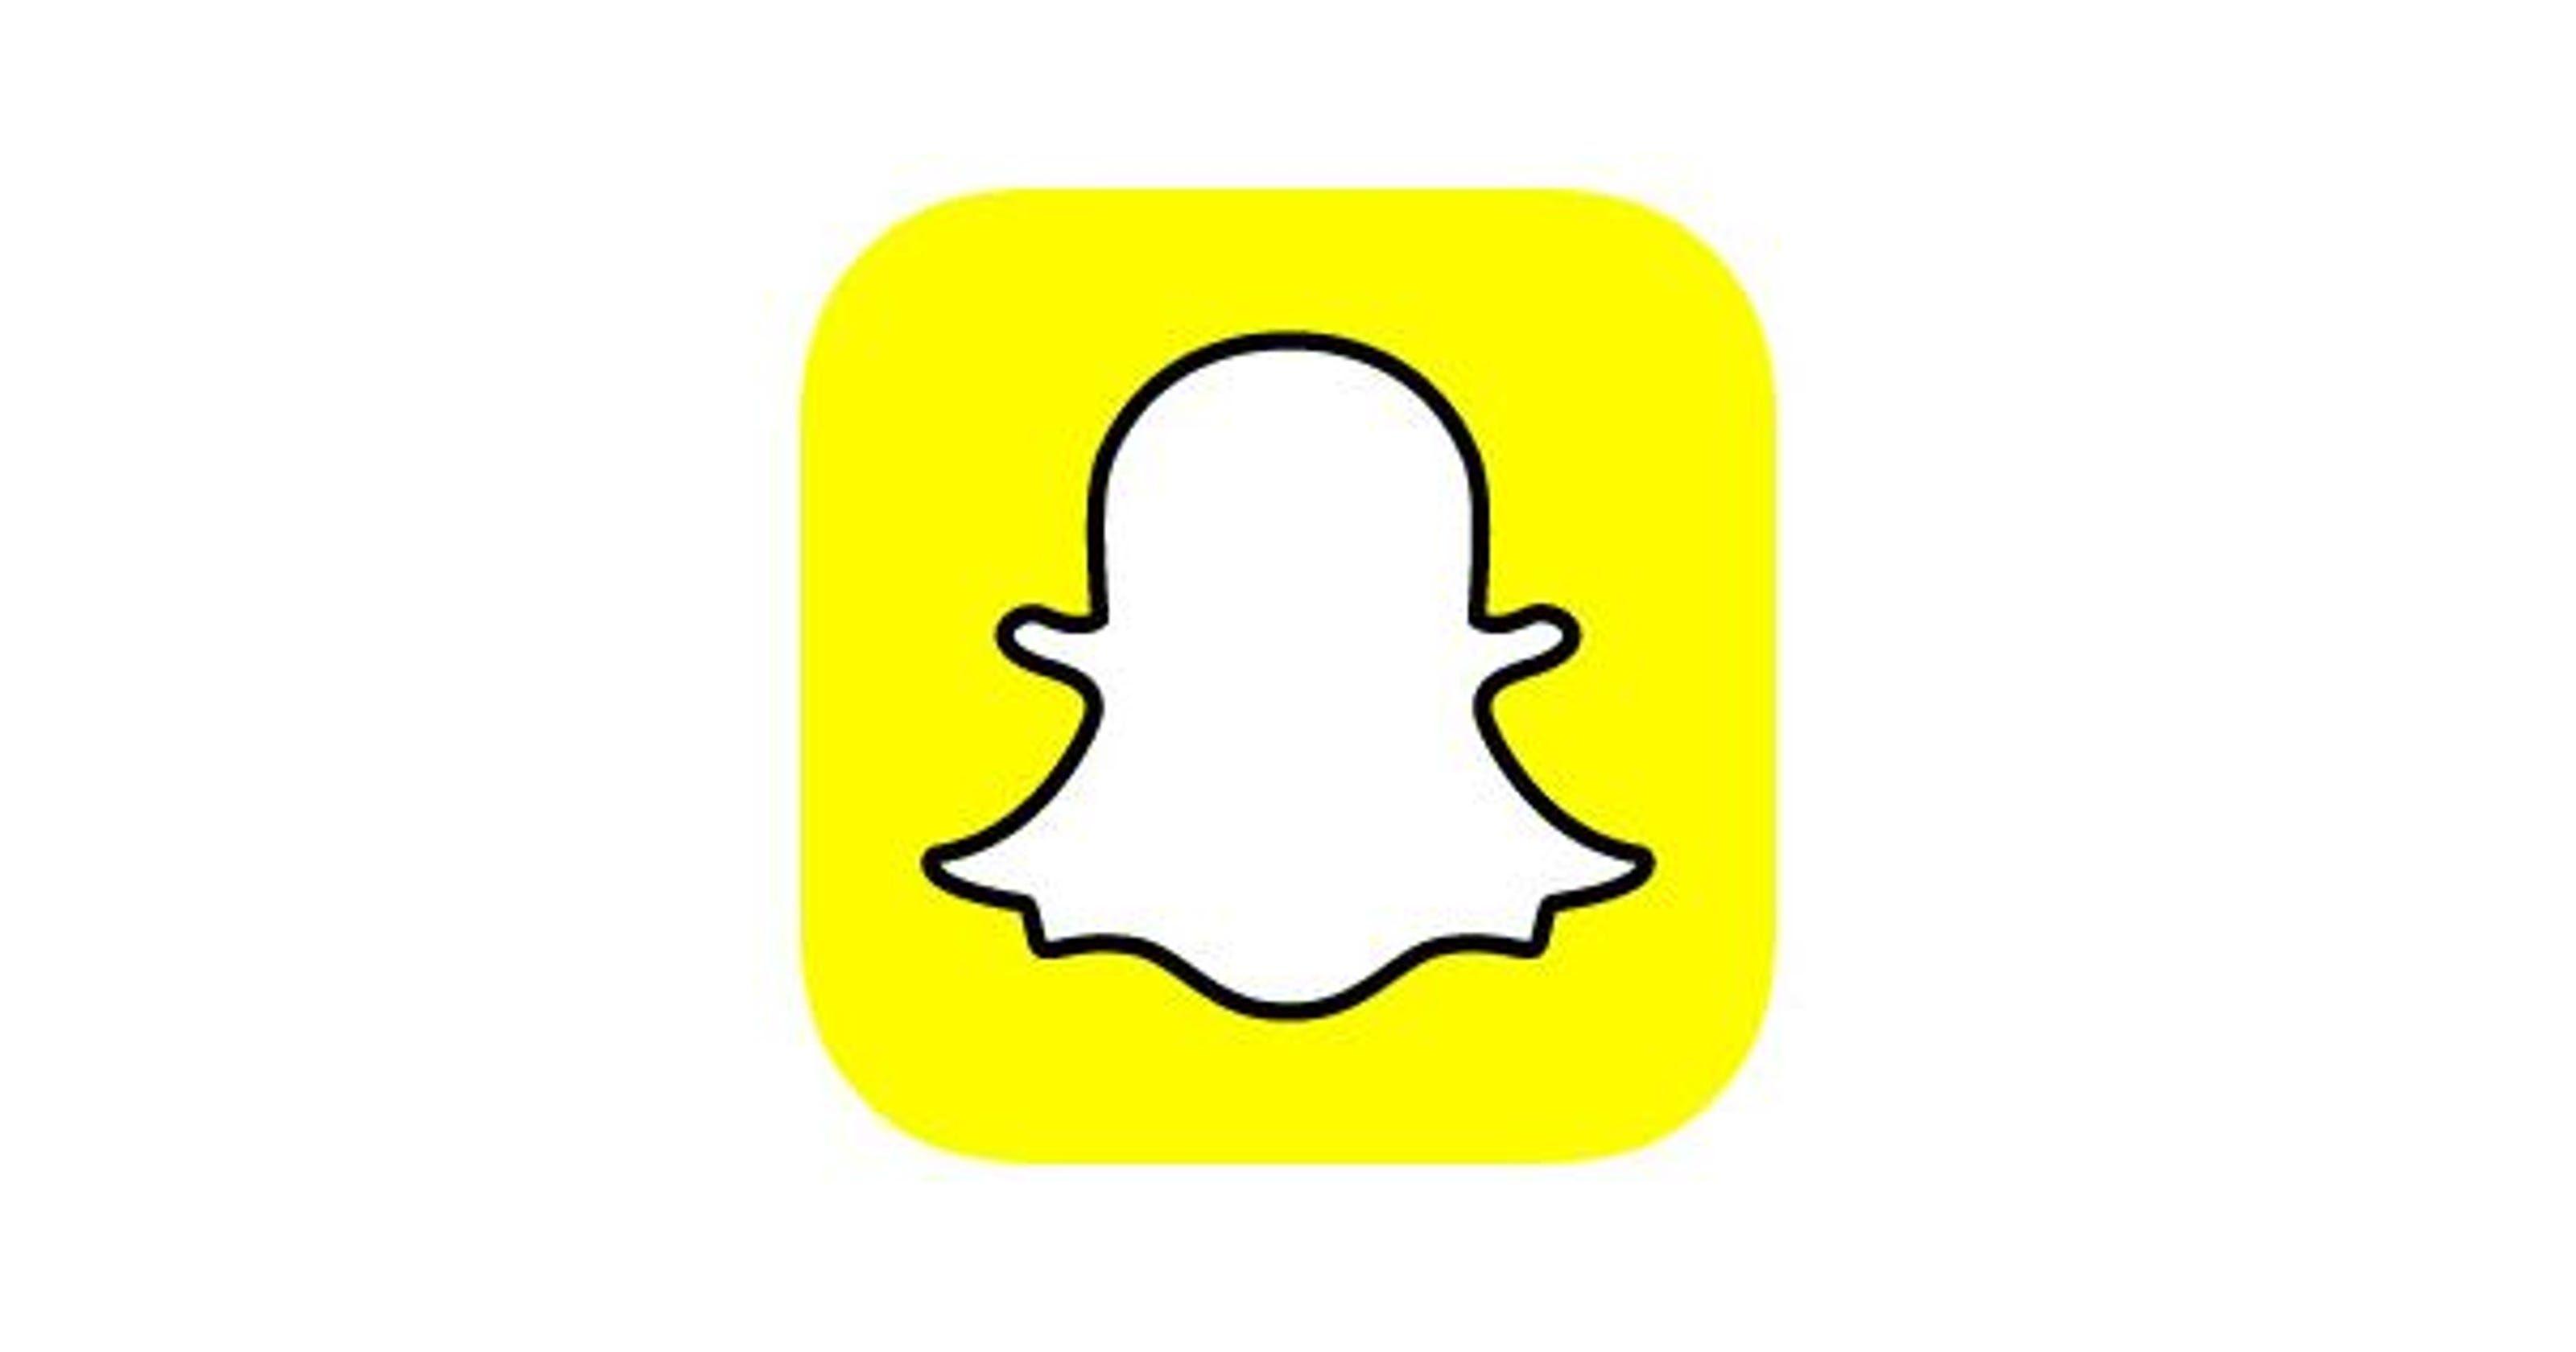 Snapchatt Logo - Alphabet's investment arm invests in Snap